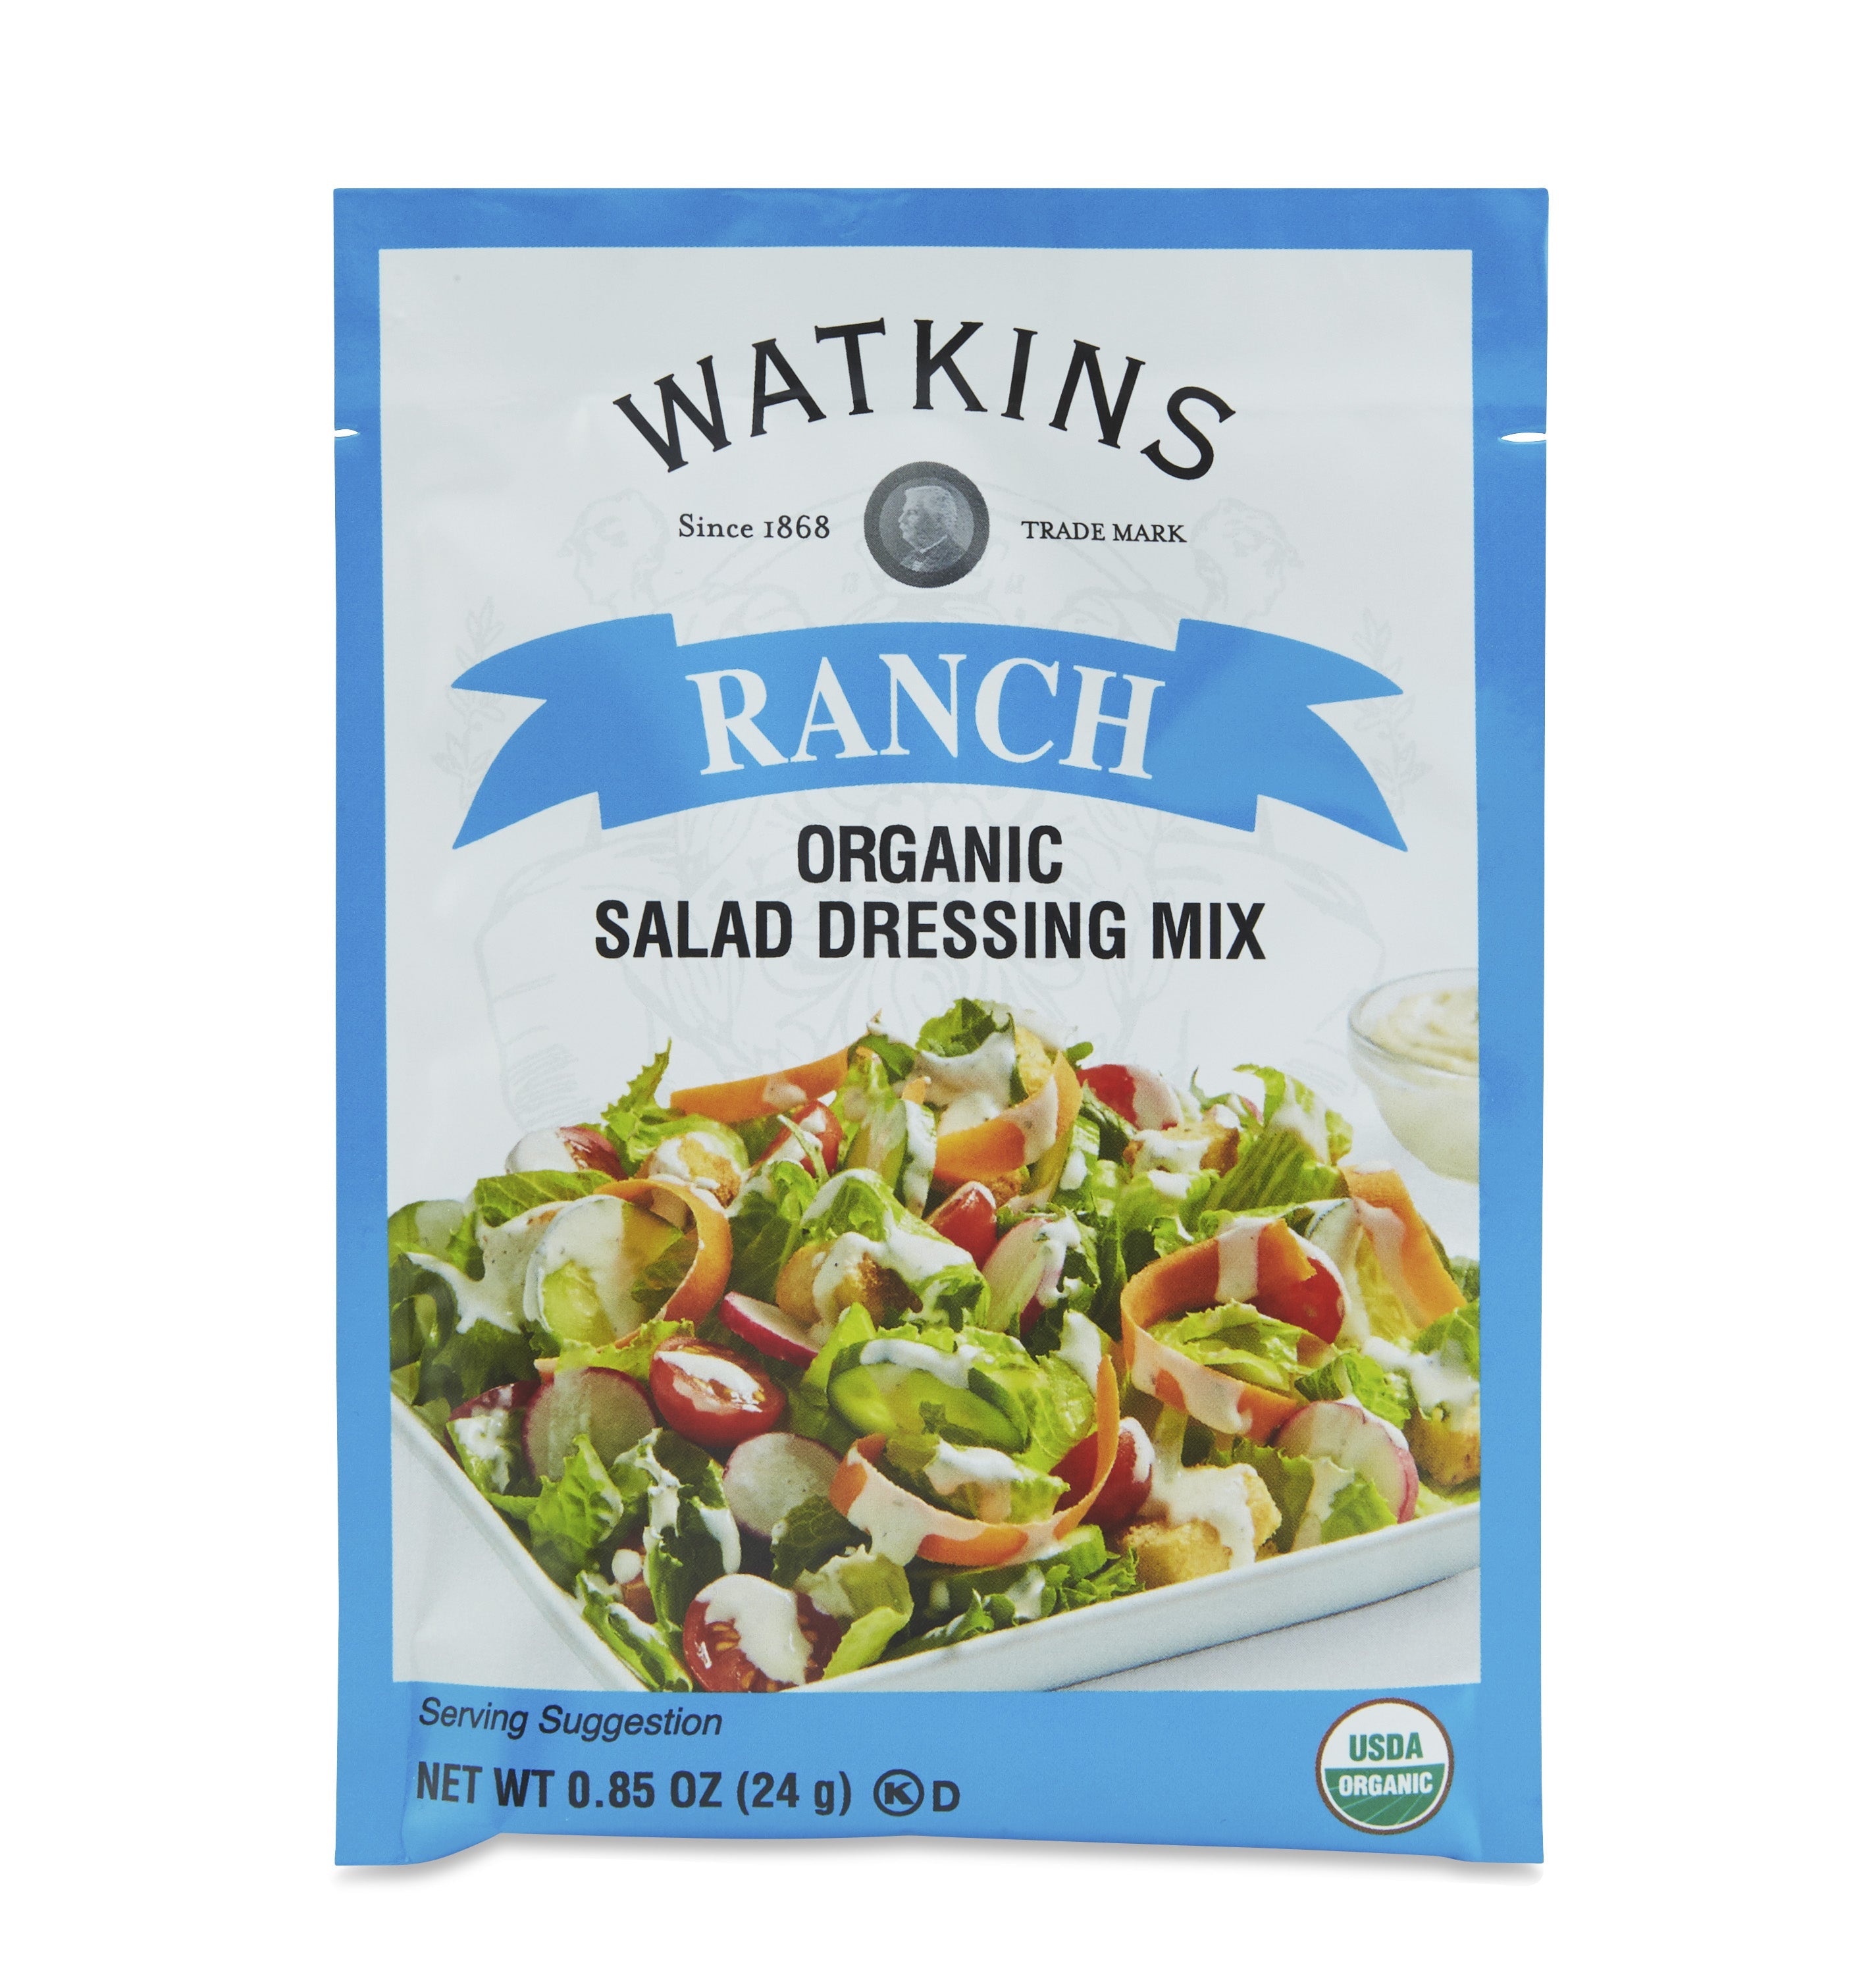 Watkins Organic Ranch Salad Dressing Mix